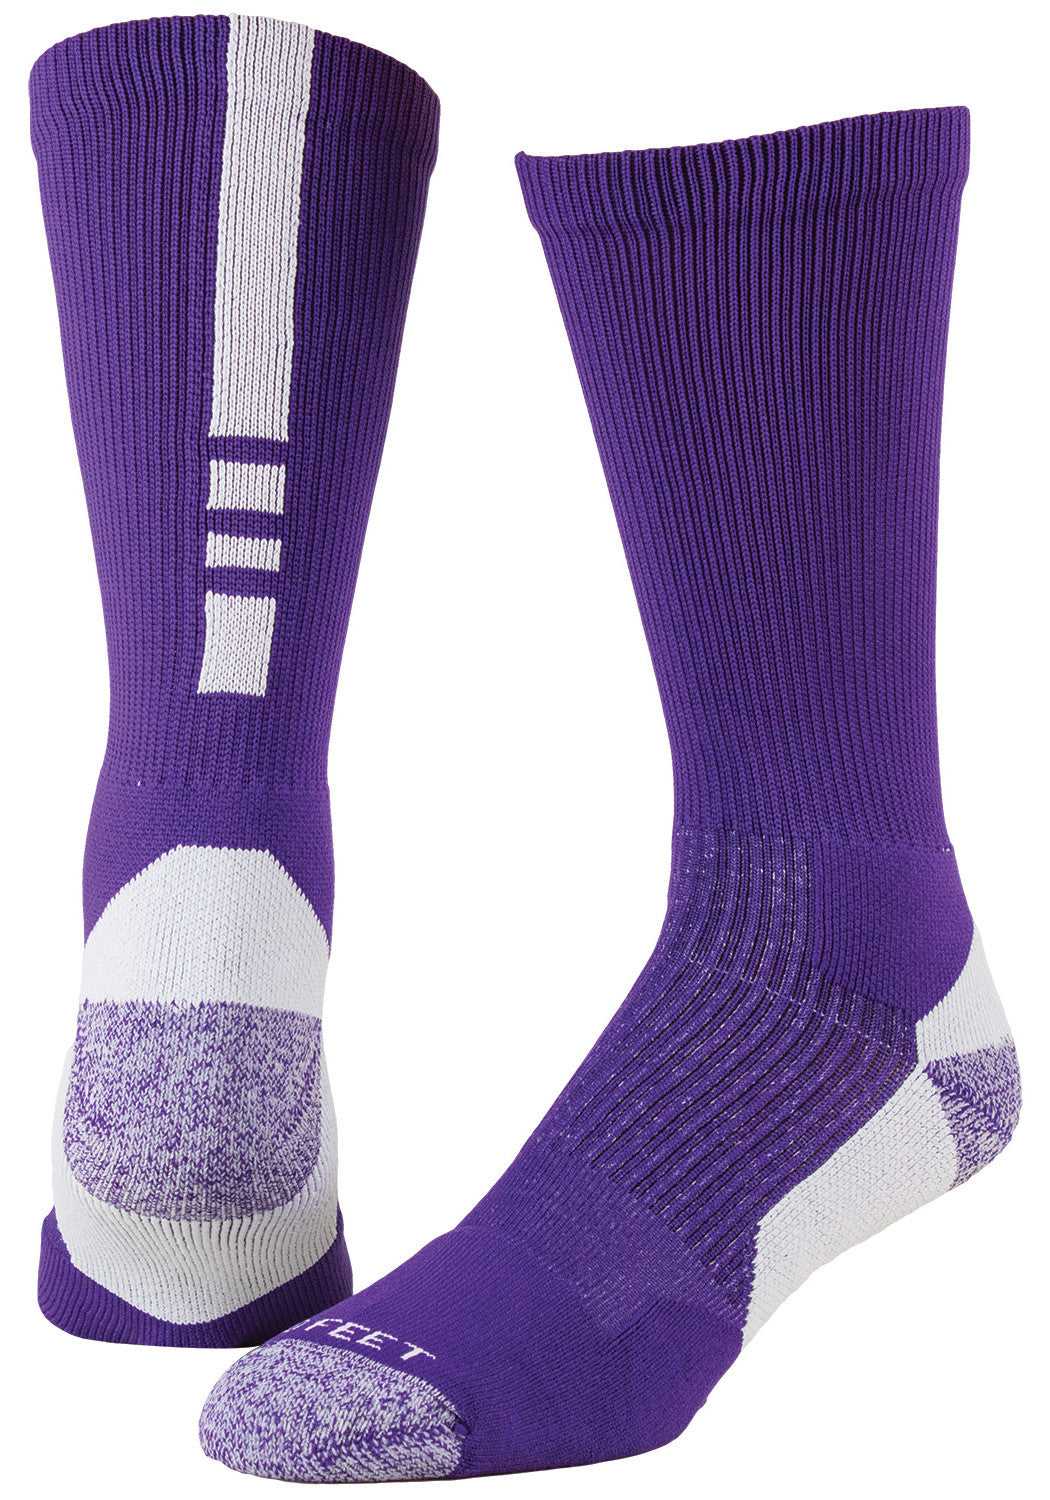 Pro Feet 238 Pro Feet Performance Shooter 2.0 Crew Socks - Purple White - HIT a Double